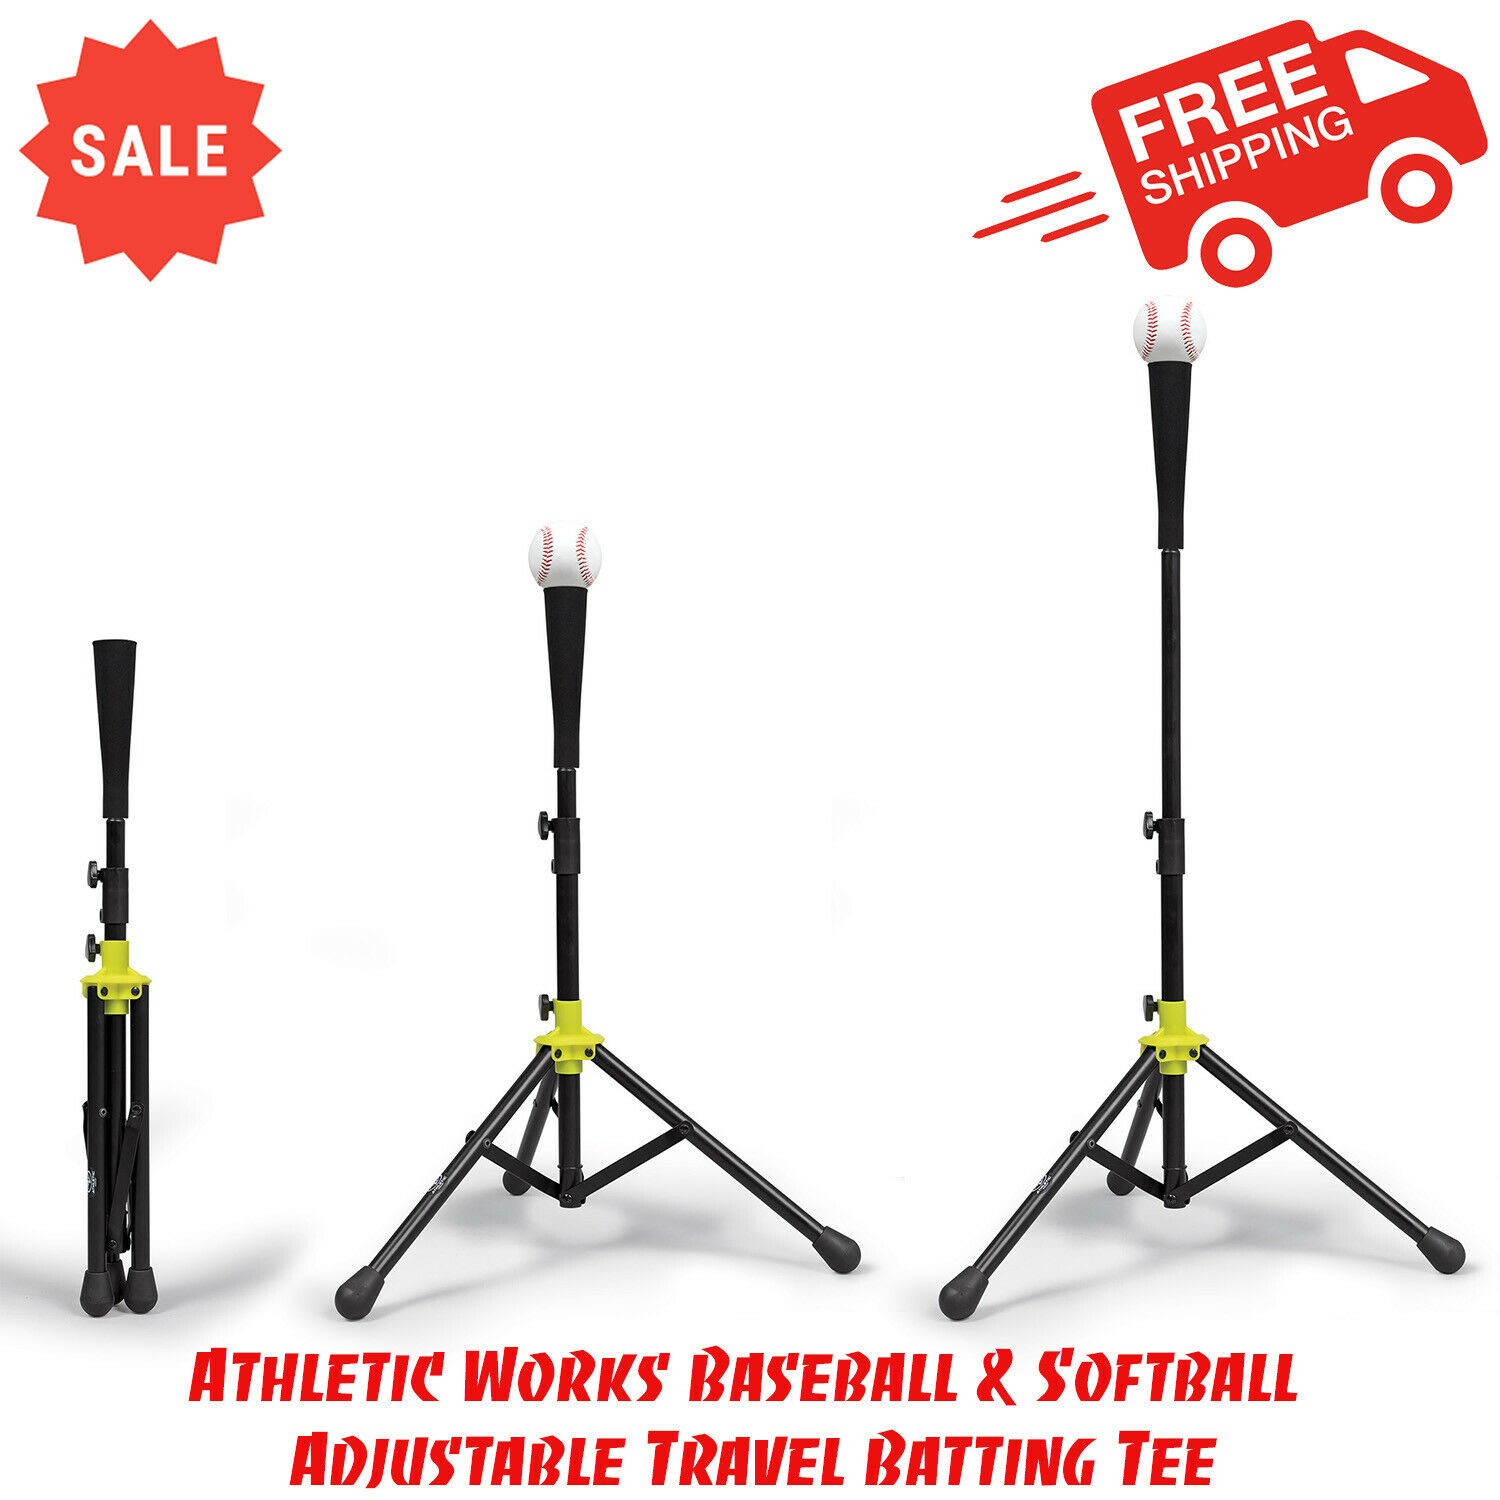 Athletic Works Baseball & Softball Adjustable Travel Batting Tee, Delivery Size